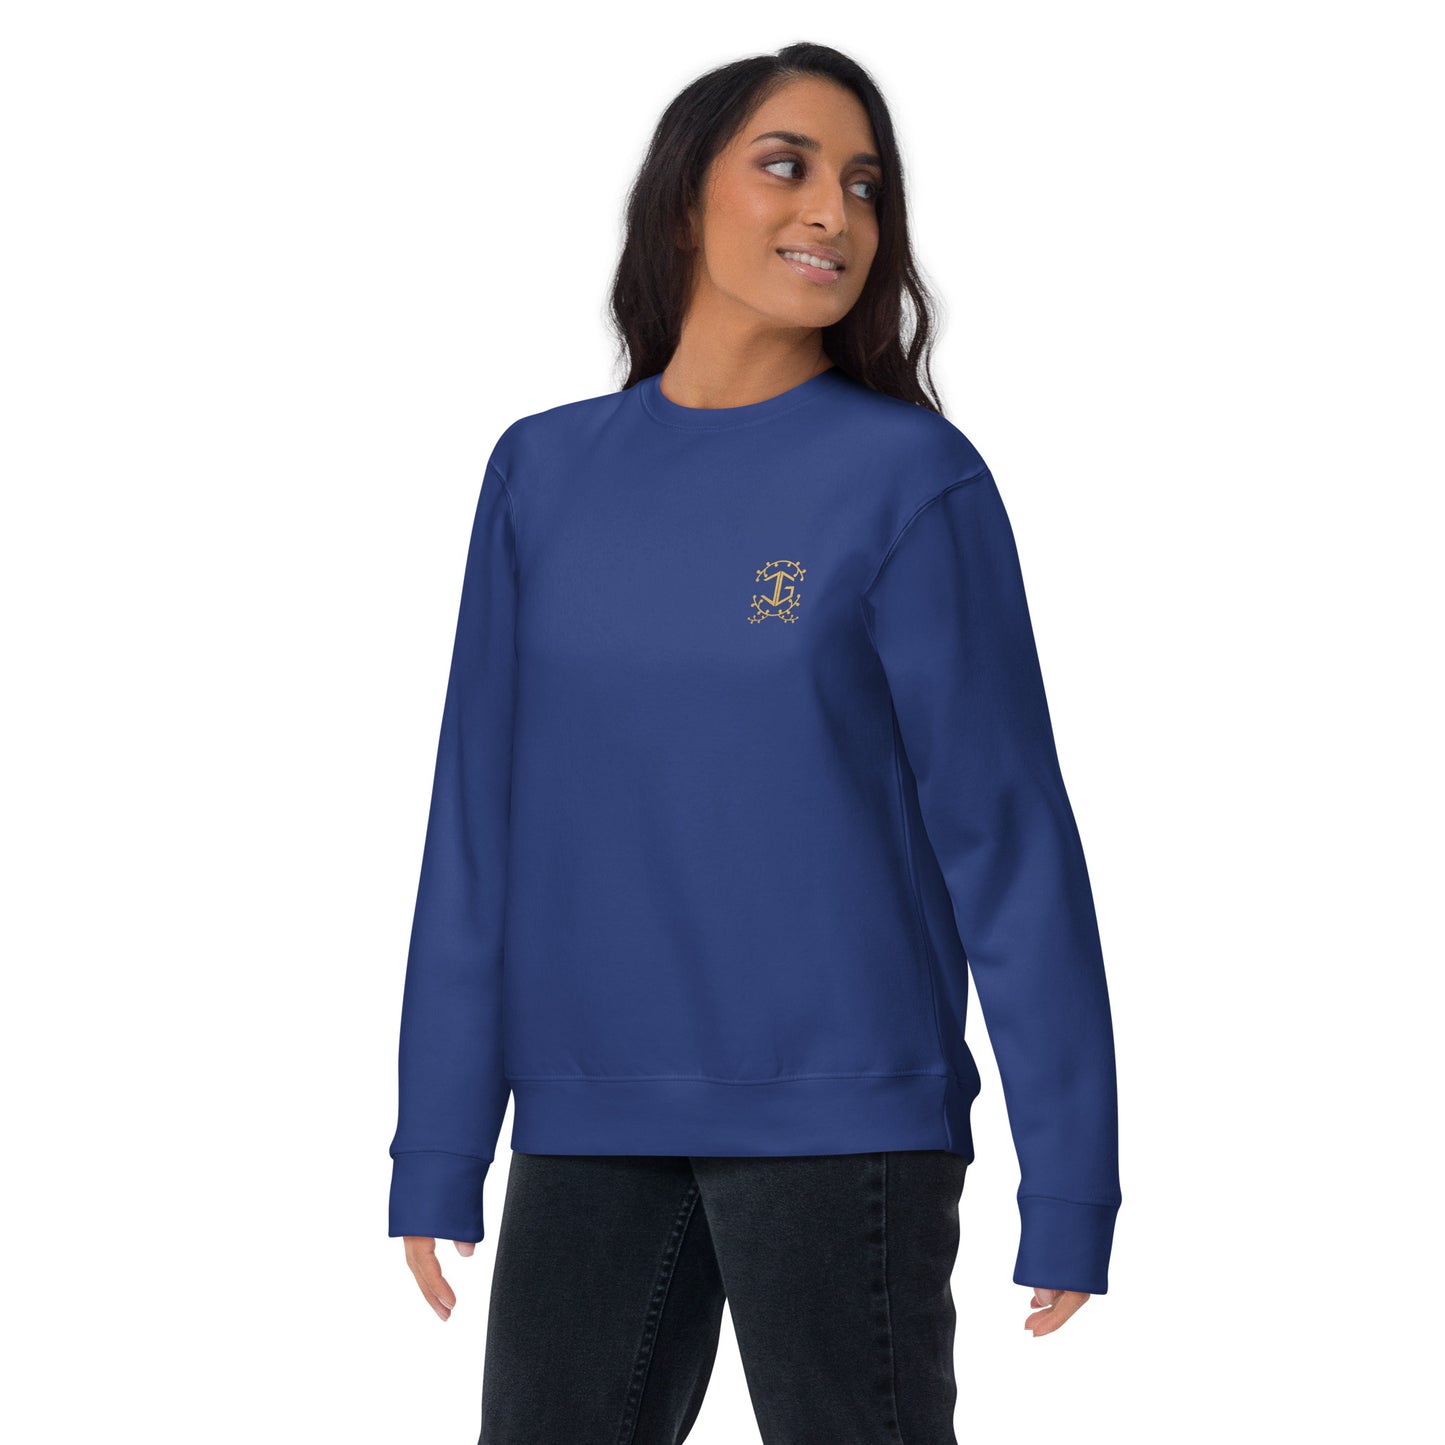 Common Ground "CG" Embroidered Premium Sweater